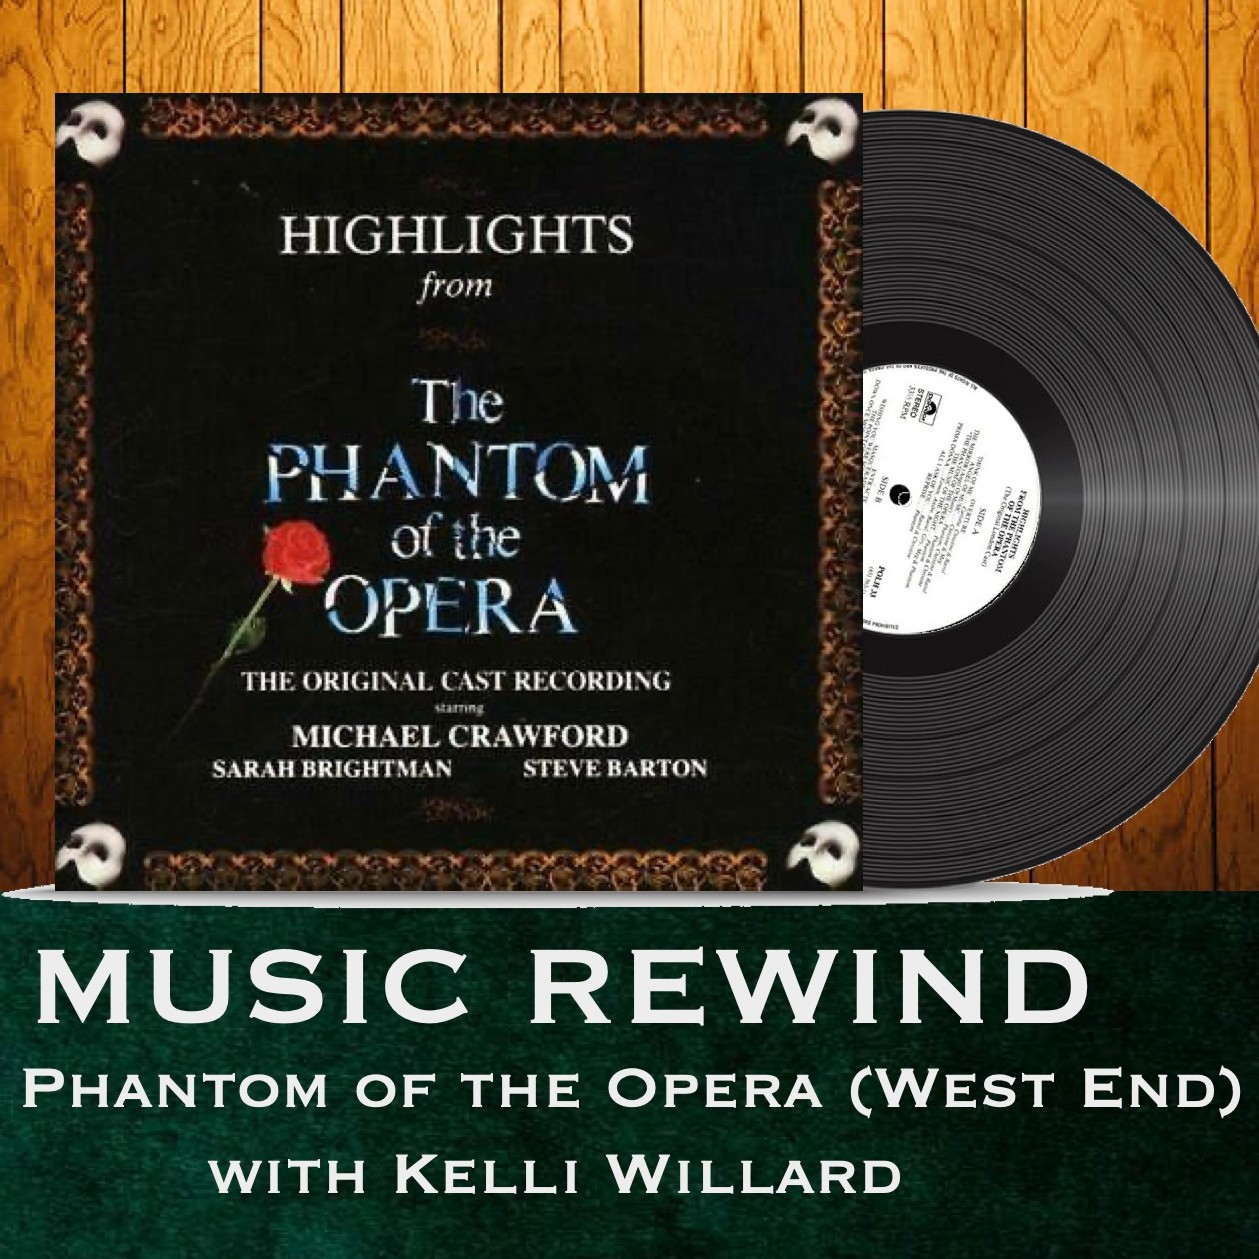 Phantom of the Opera with Kelli Willard